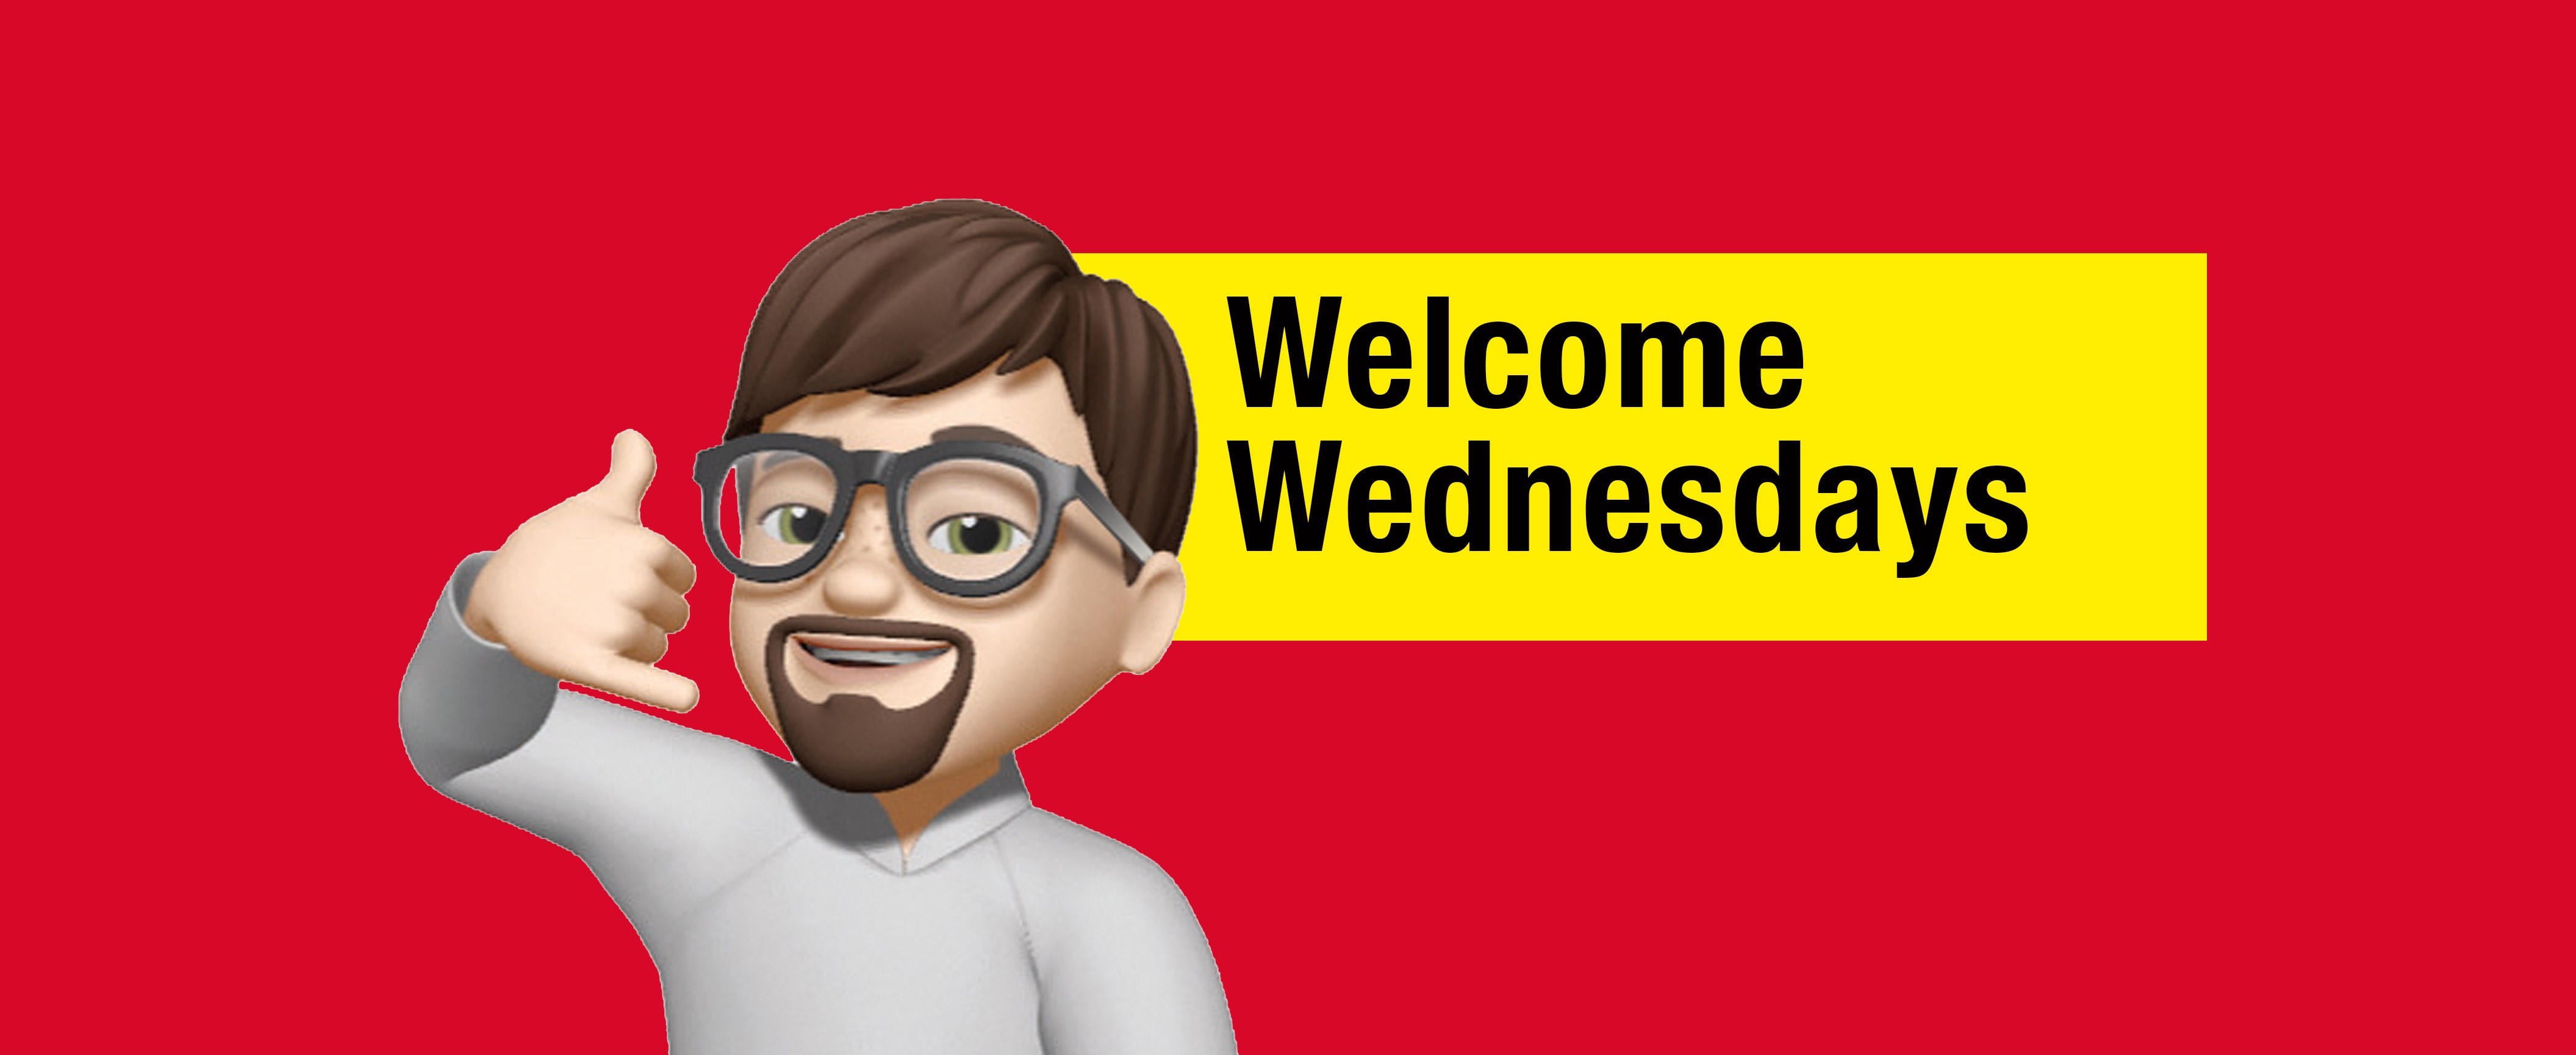 Welcome Wednesdays!